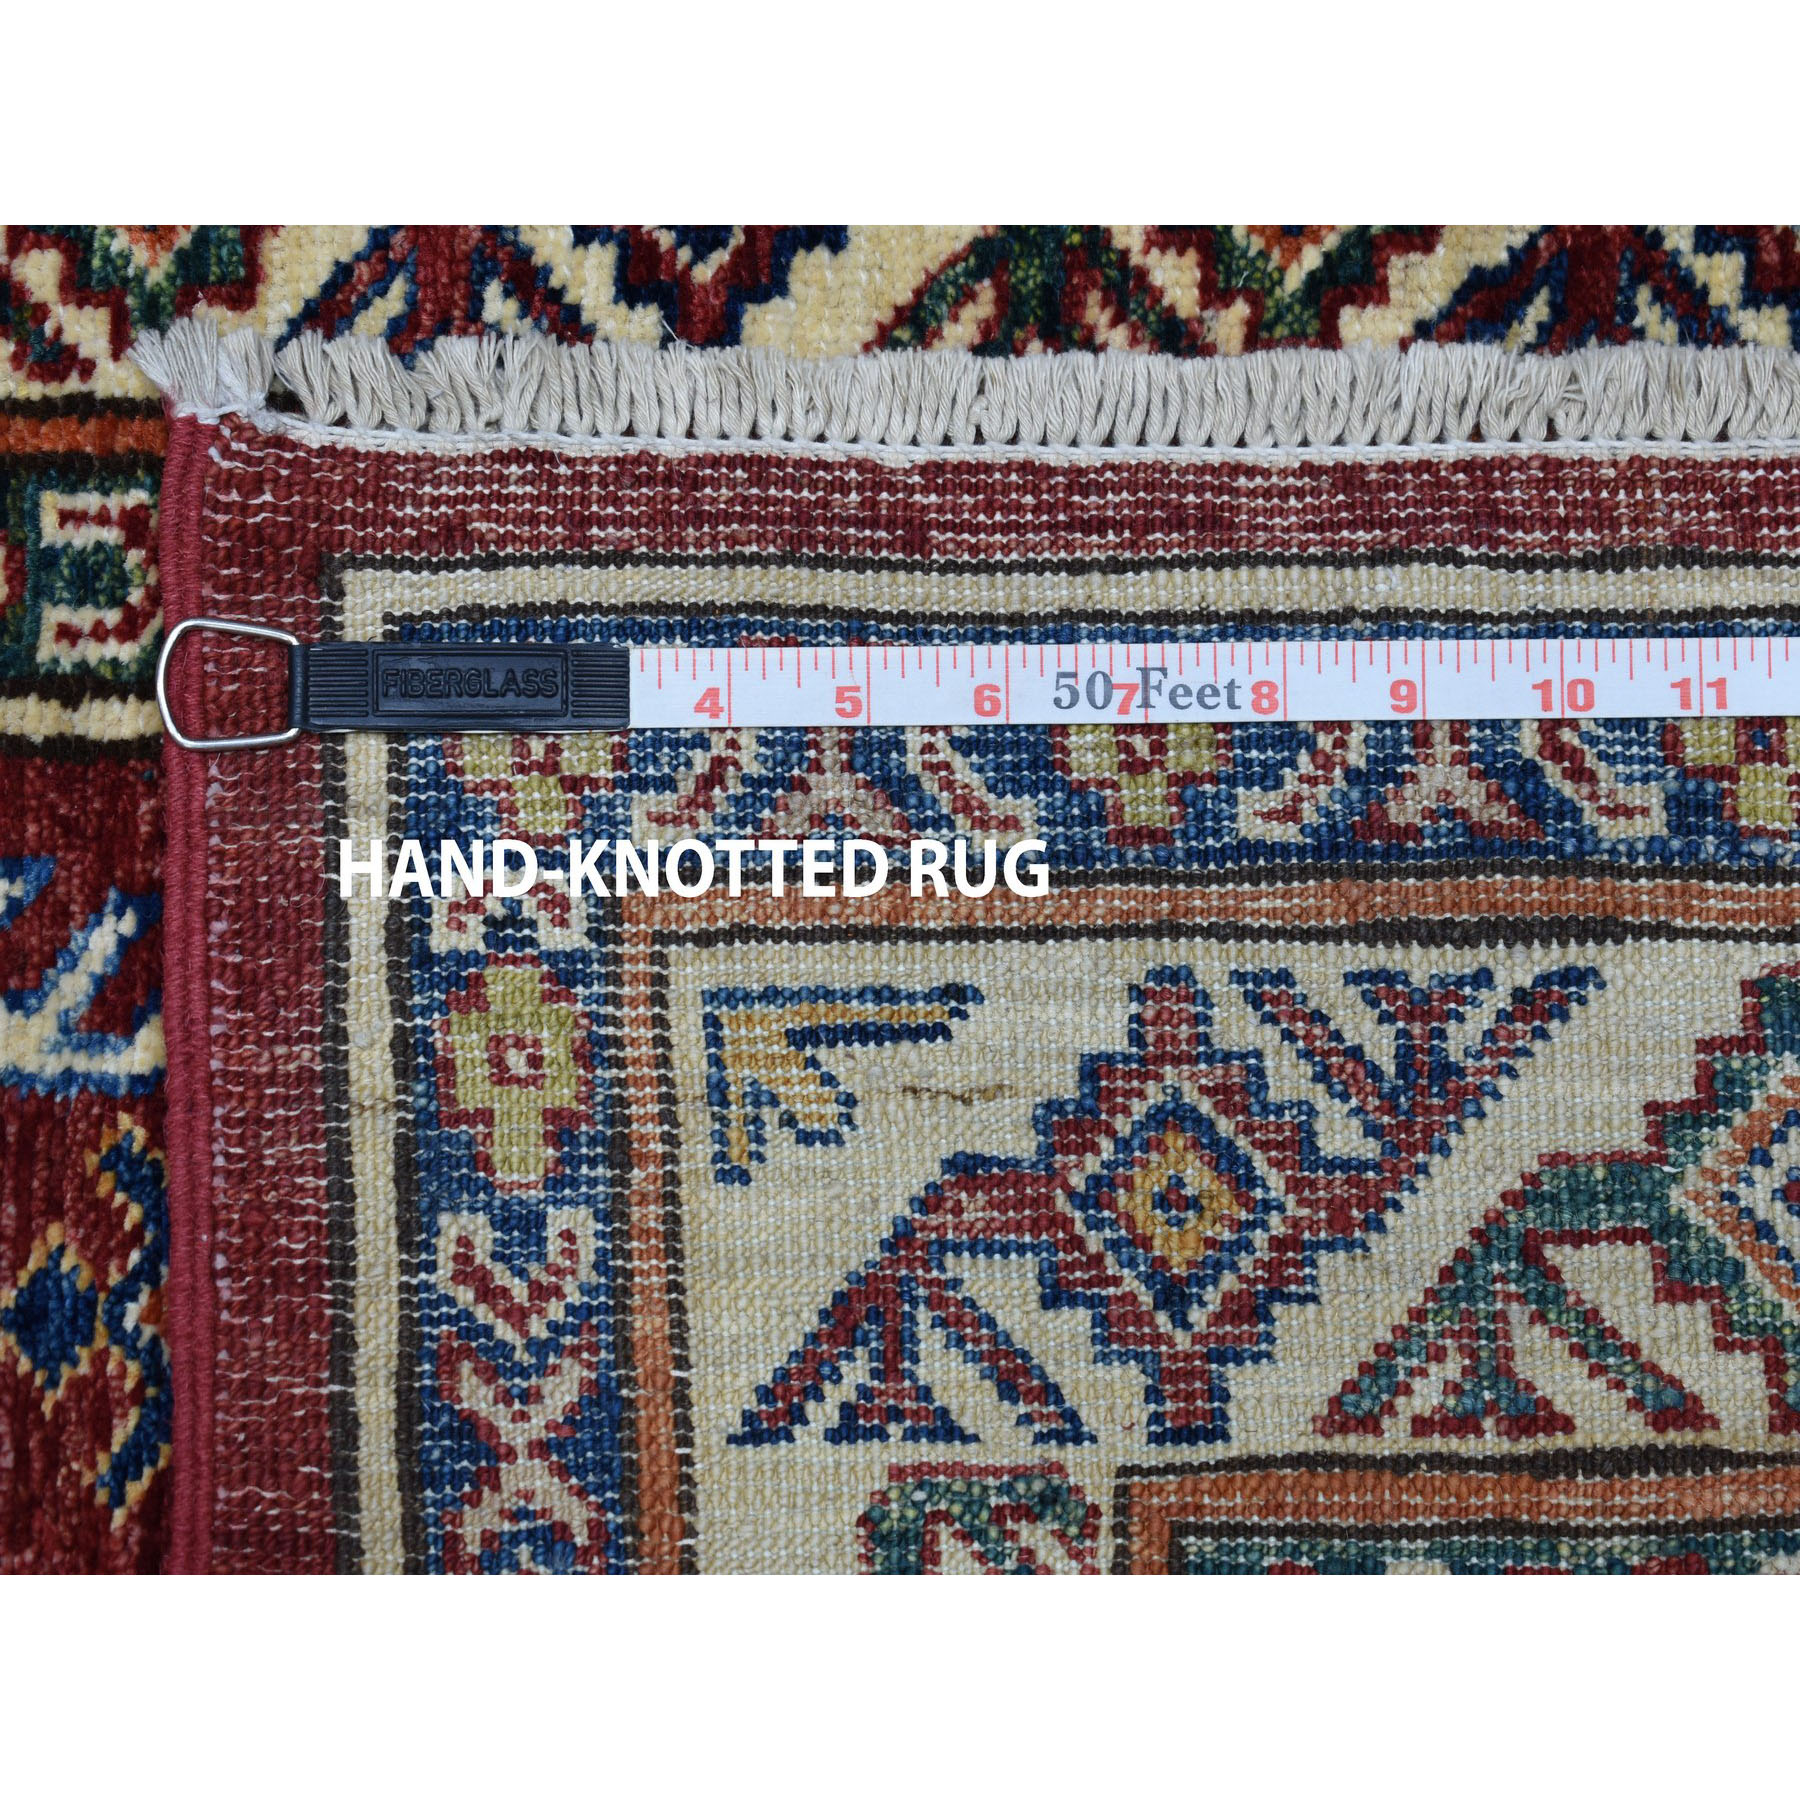 3'4"x19' Red Super Kazak Geometric Design Pure Wool XL Runner Hand Woven Oriental Rug 